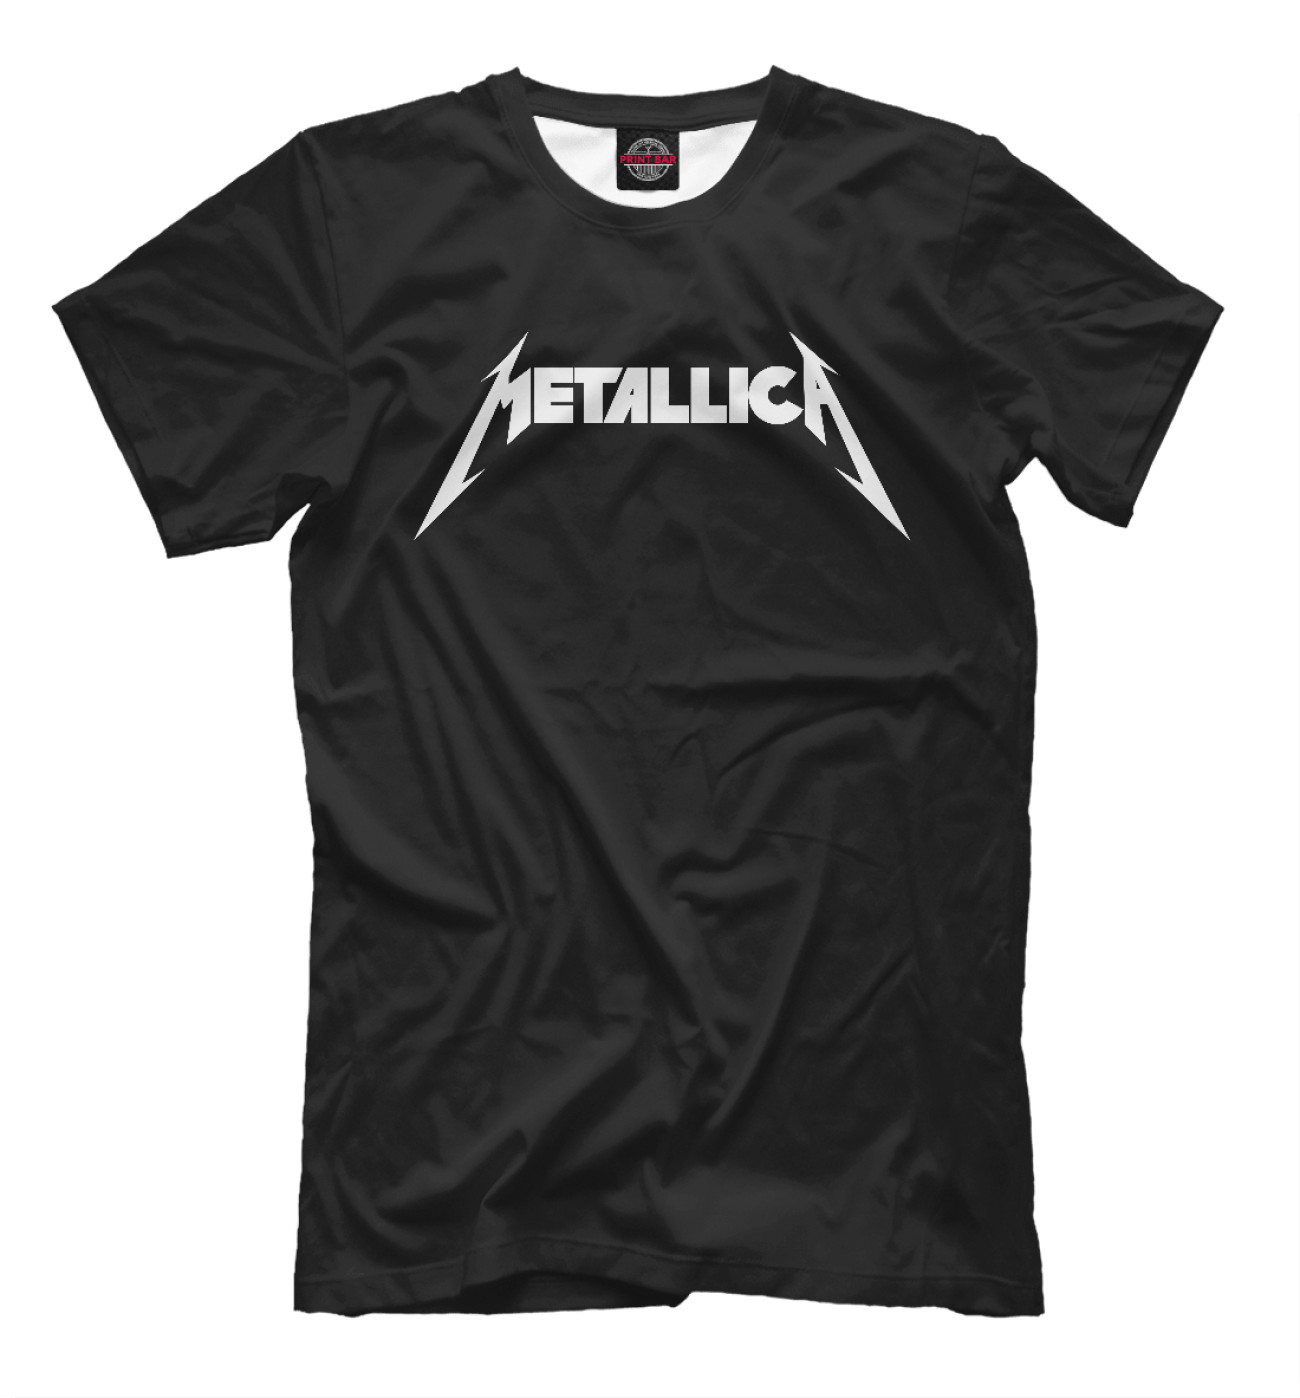 Мужская Футболка Metallica(на спине), артикул: MET-392735-fut-2